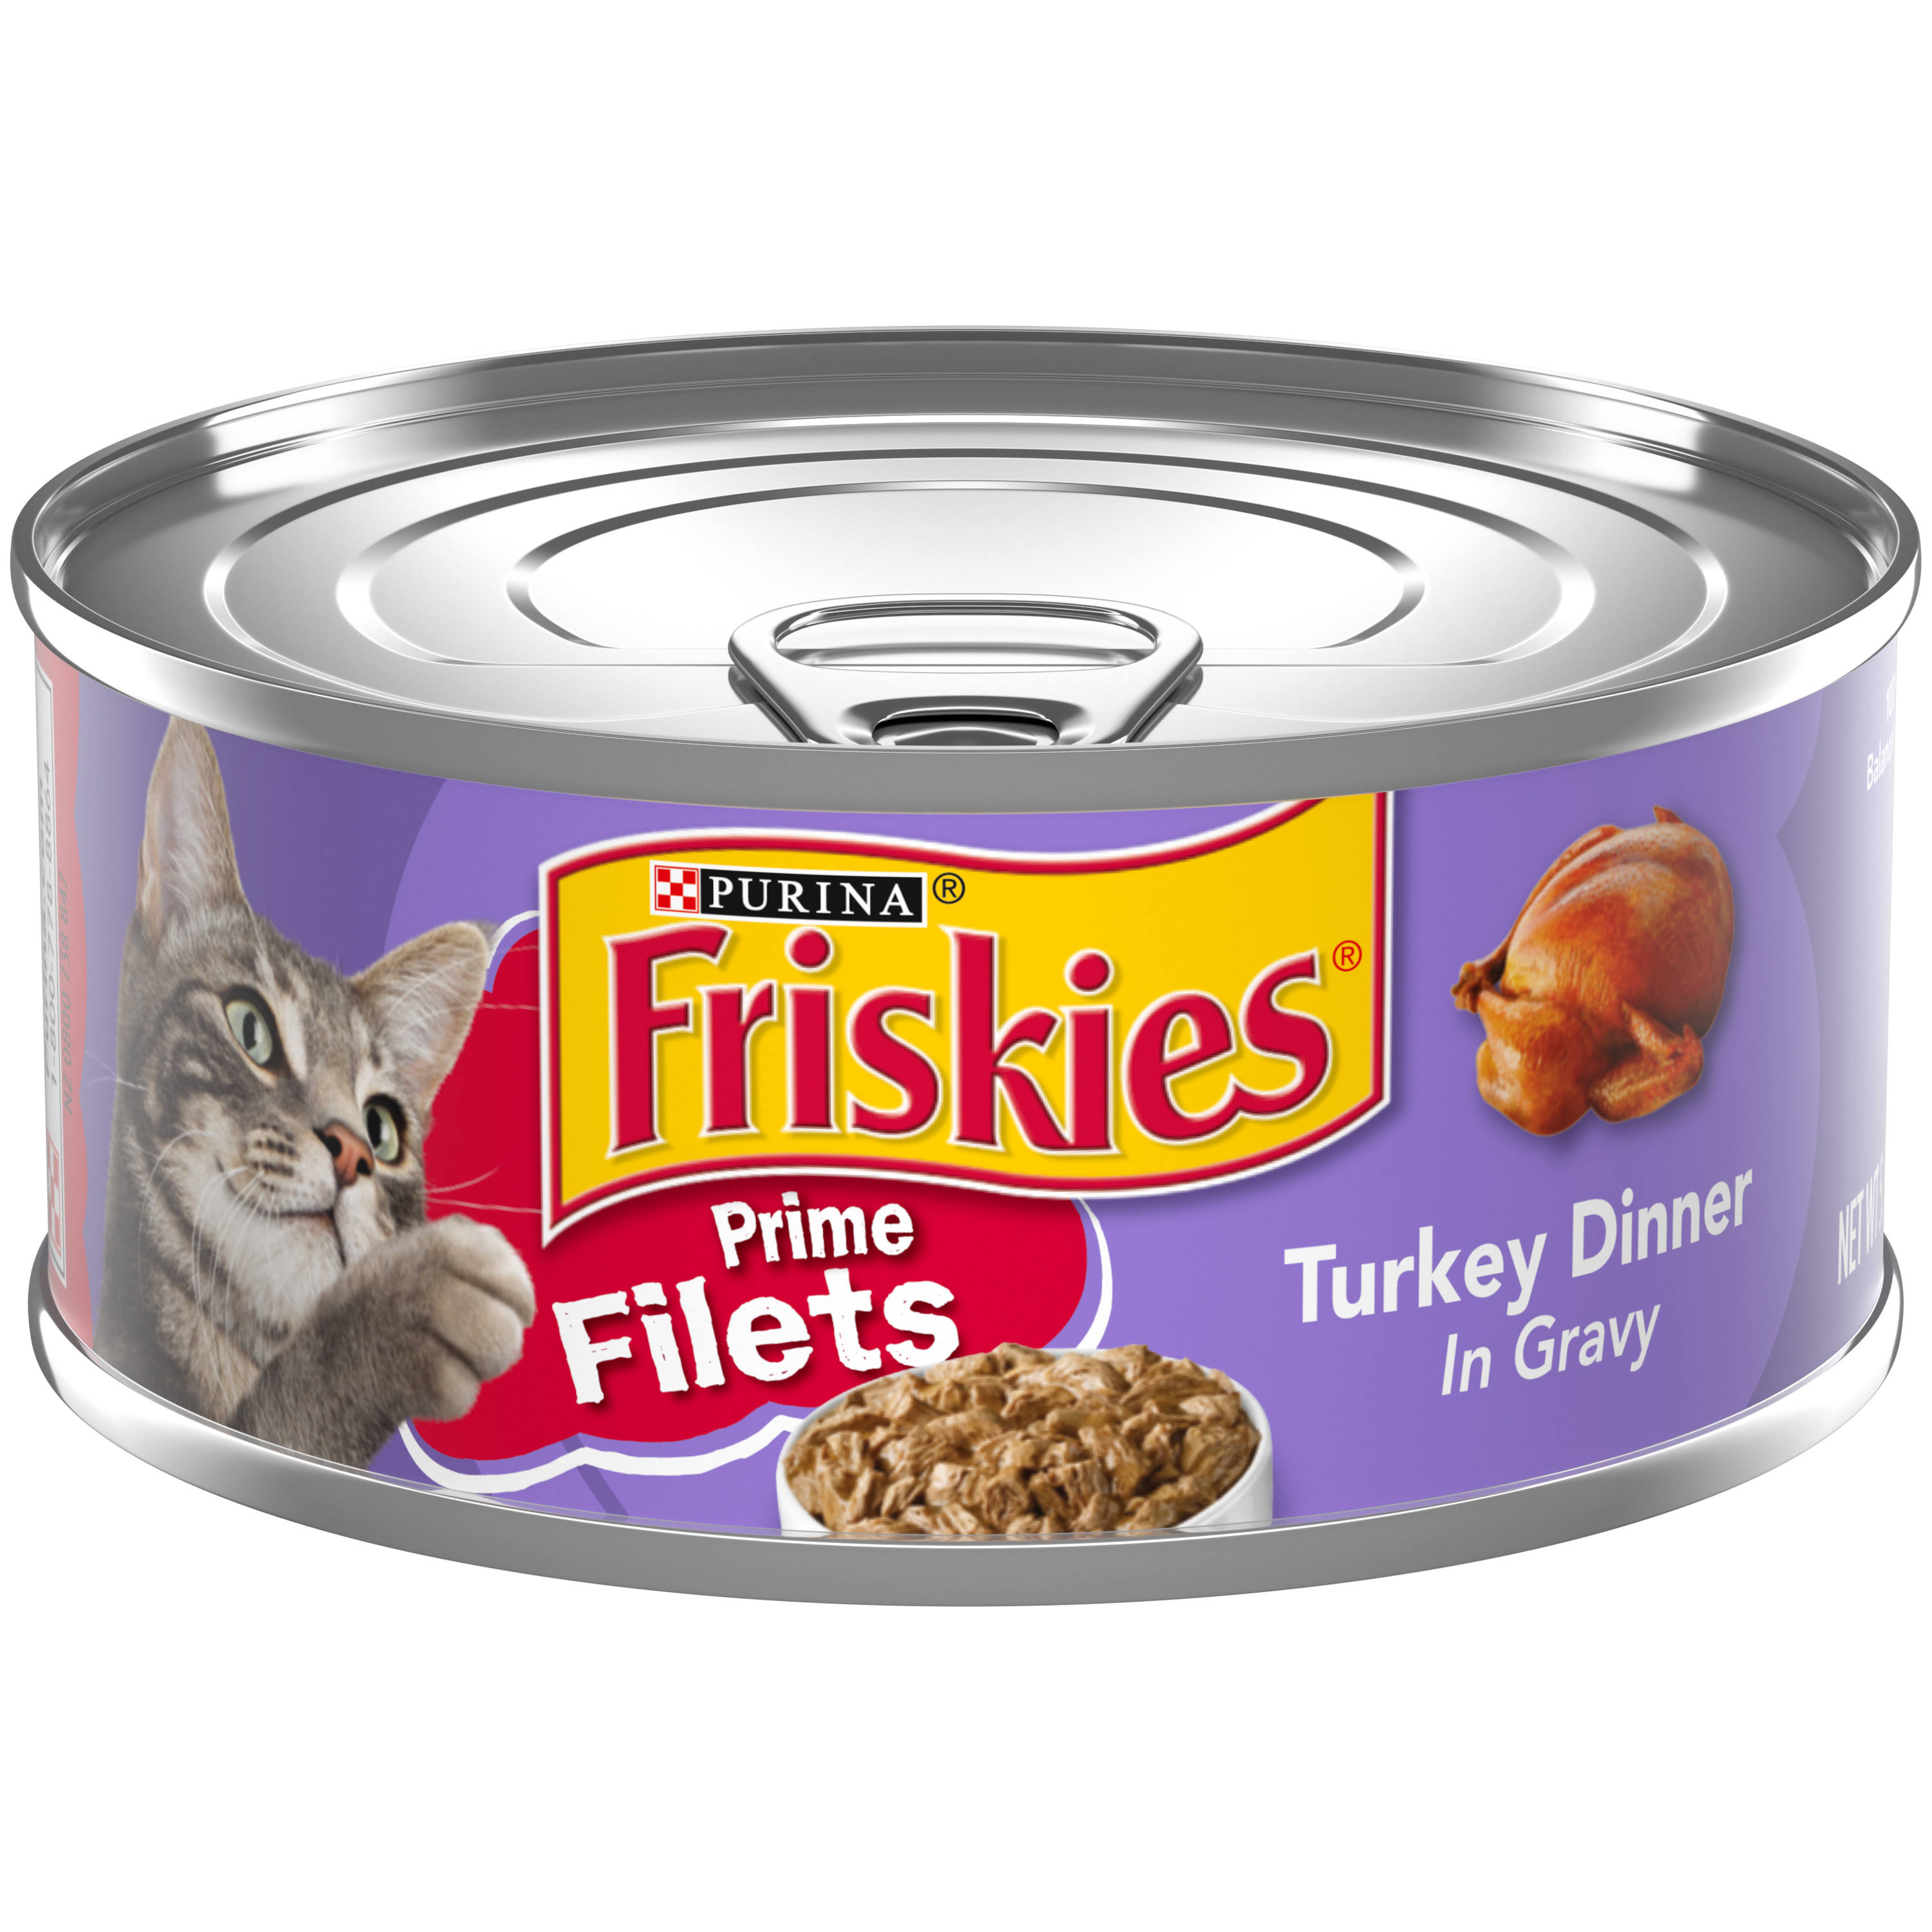 Friskies Prime Filets - Turkey Dinner in Gravy, 5.5oz